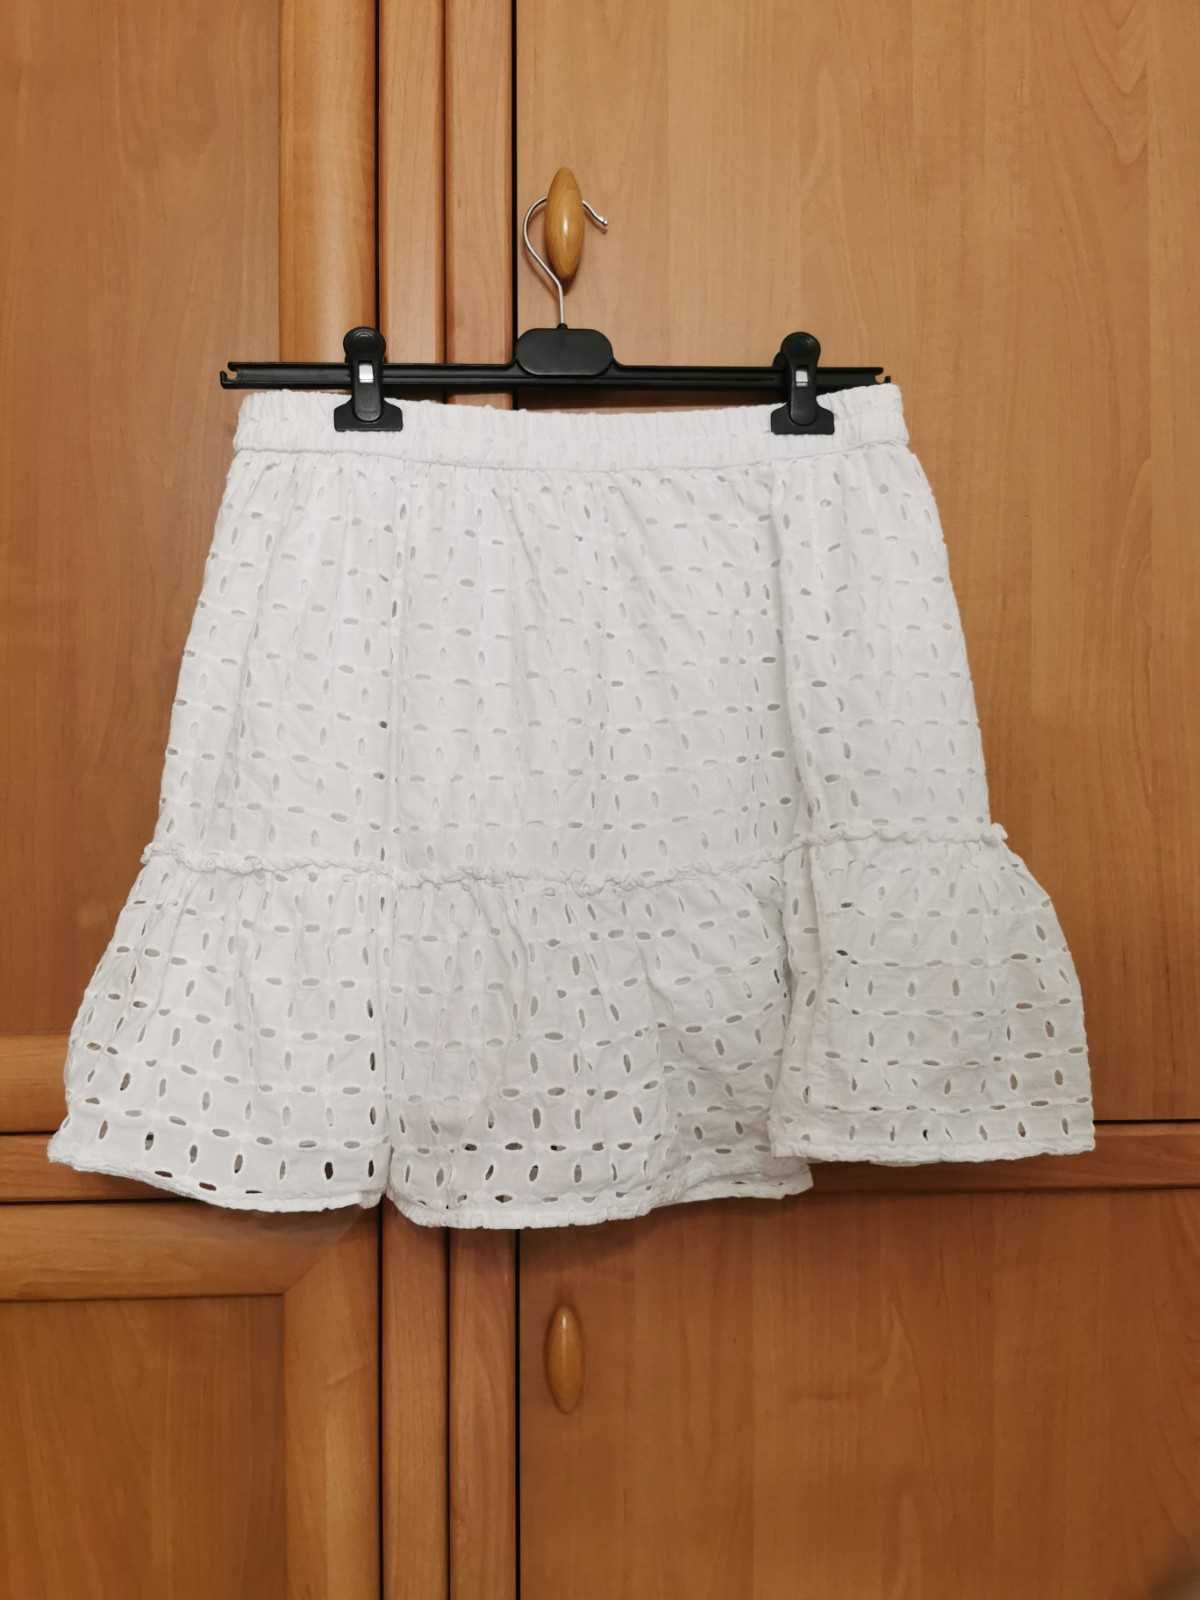 biała spódnica Top Secret rozmiar L/XL